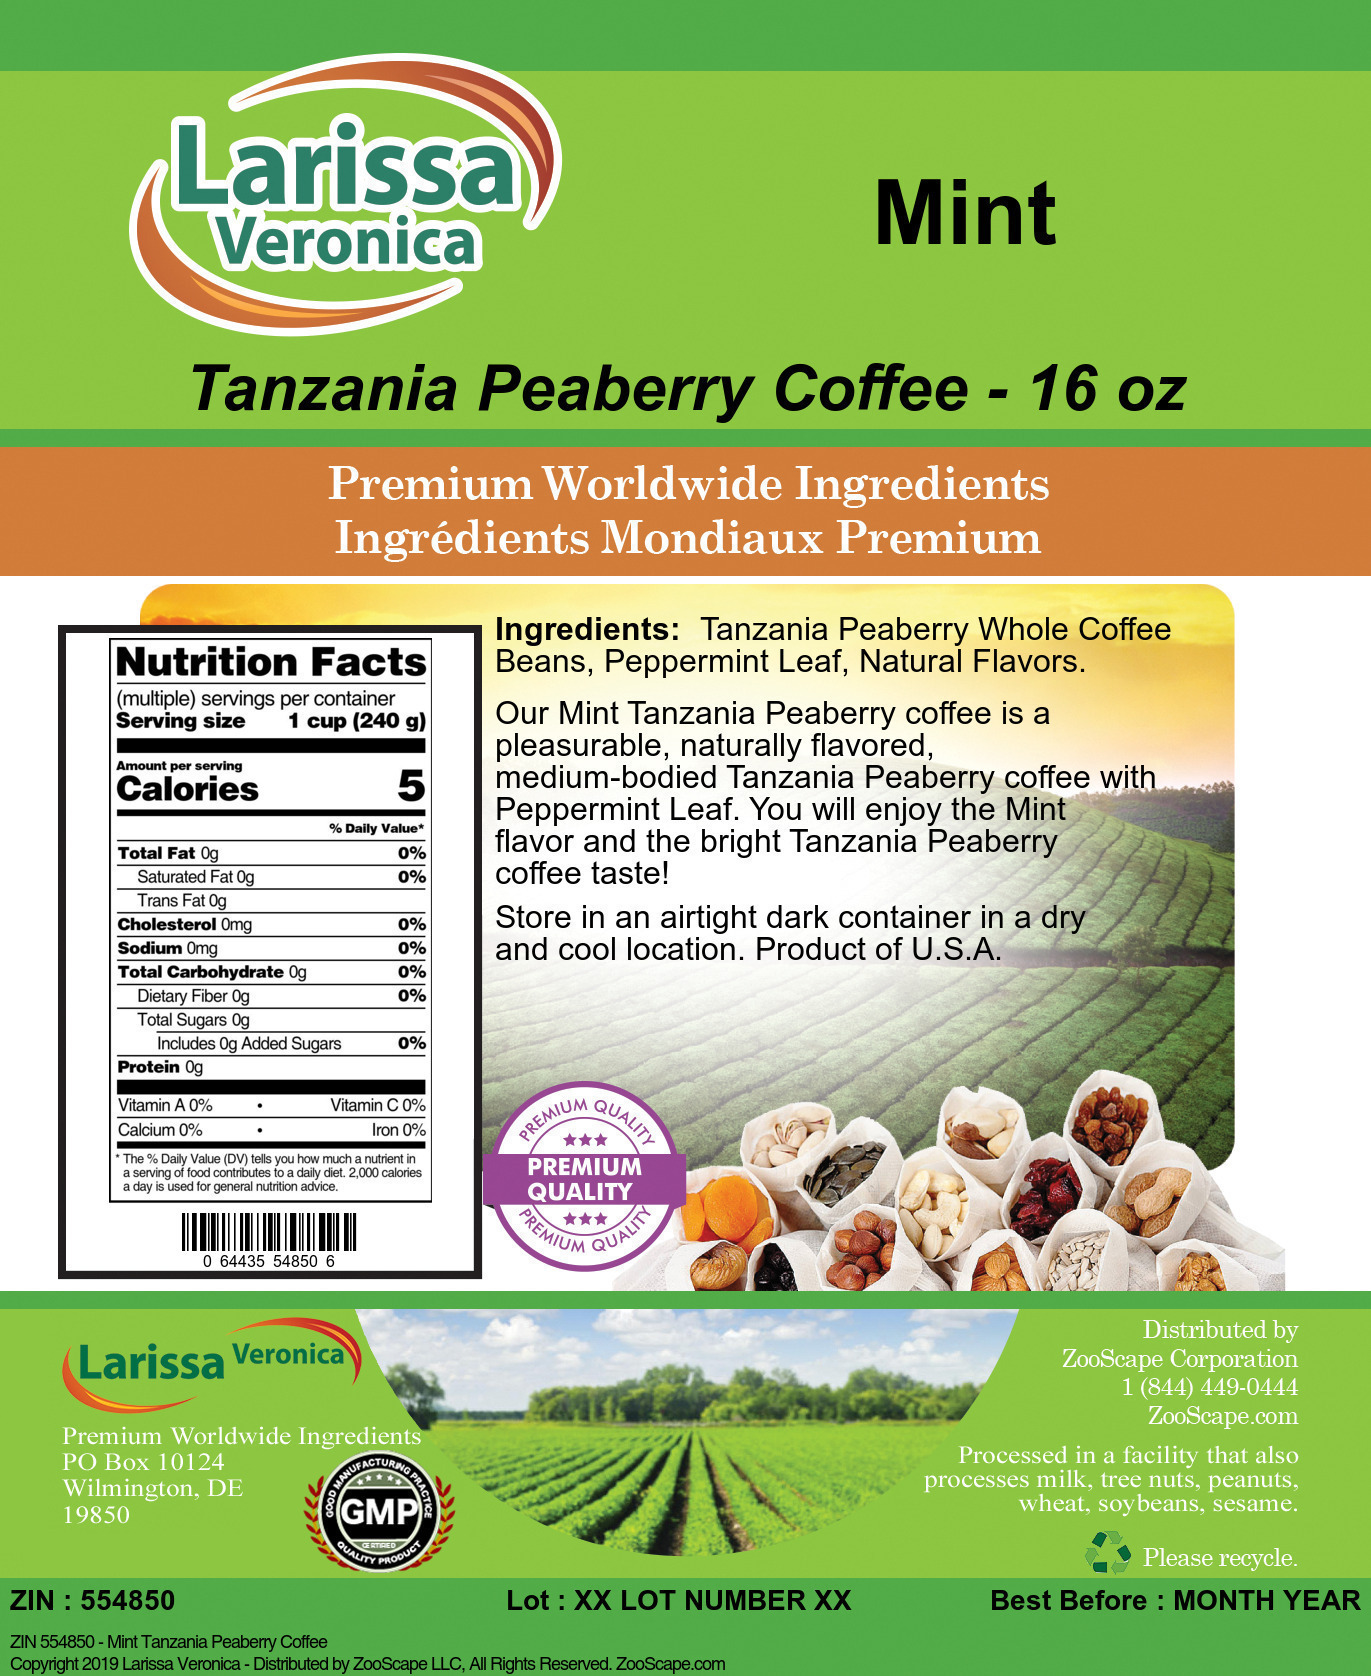 Mint Tanzania Peaberry Coffee - Label